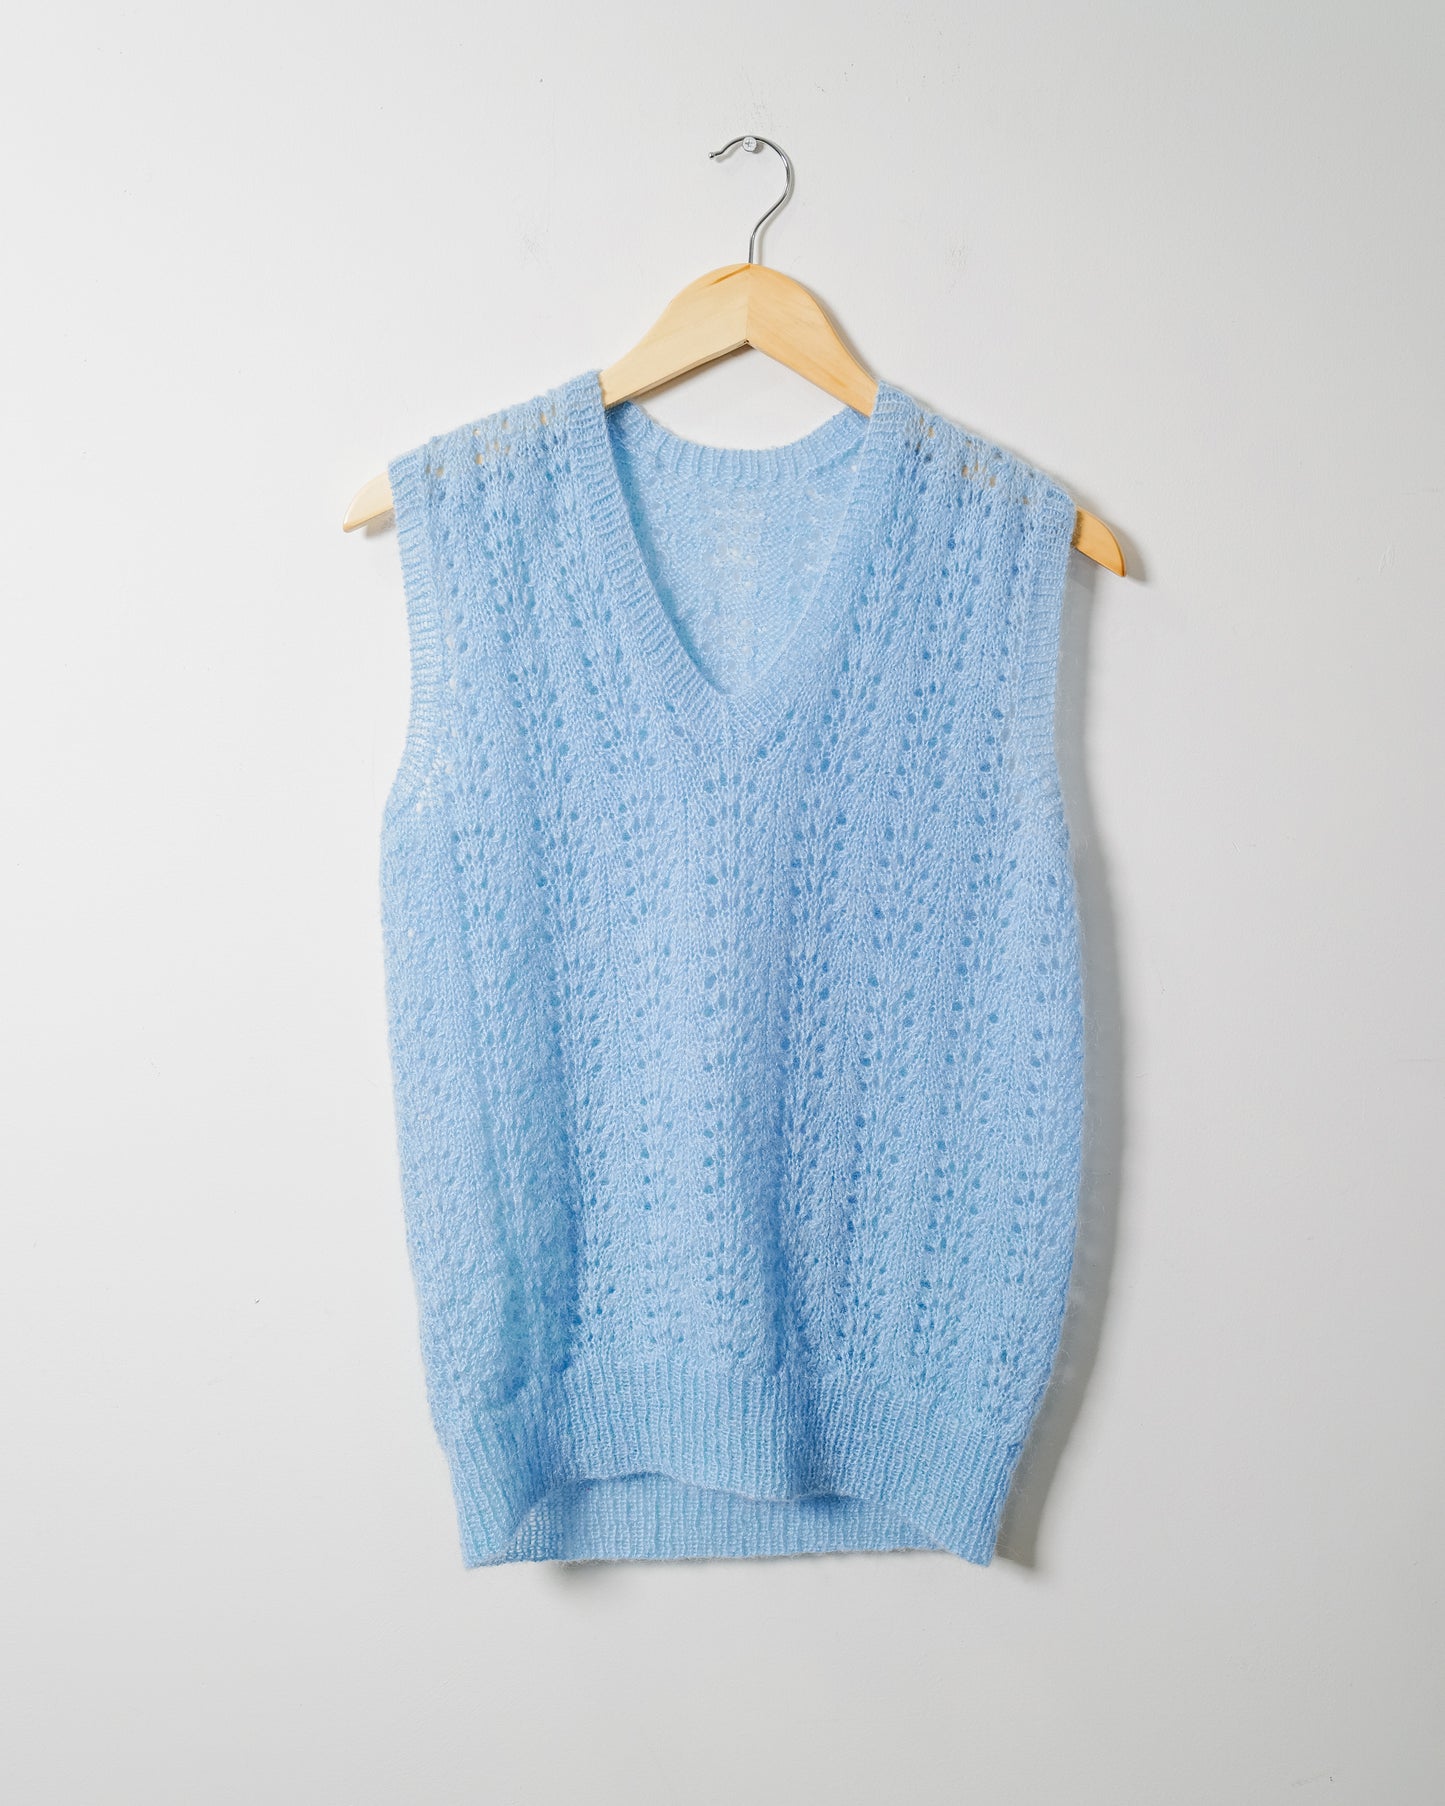 Vintage Blue Knit Vest - Size Medium